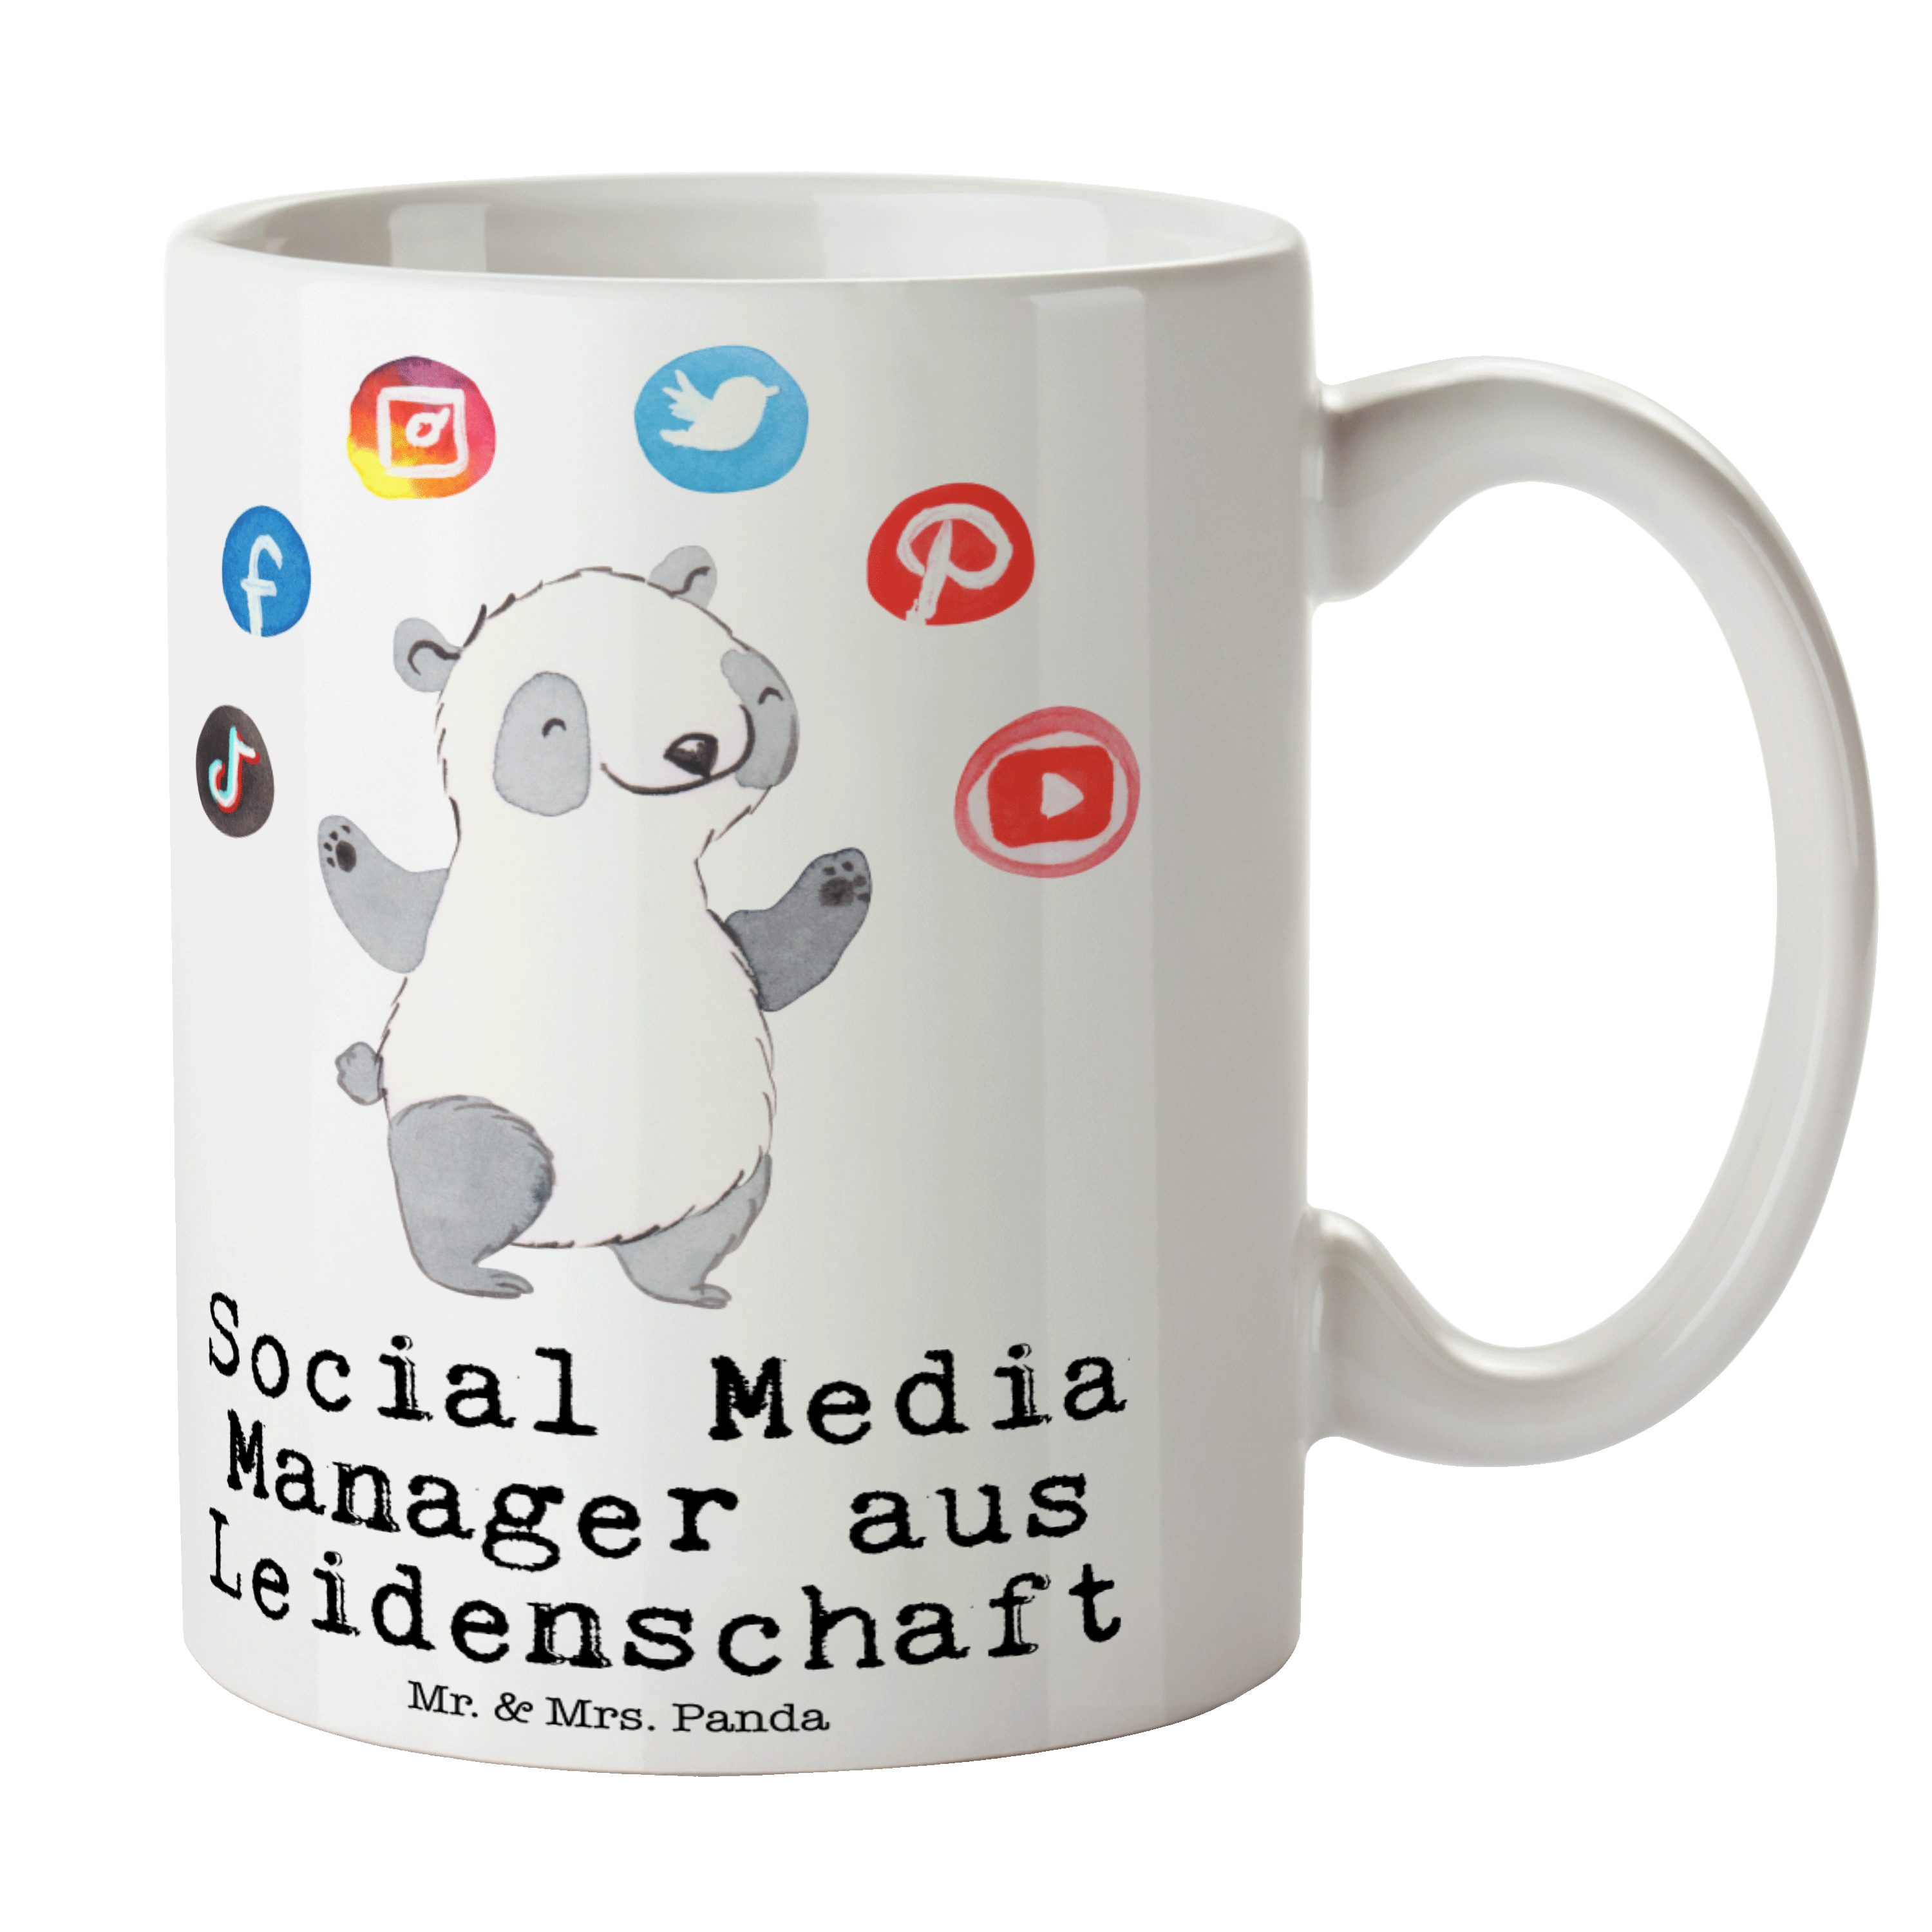 Mr. & Mrs. Panda Tasse Social Media Manager aus Leidenschaft - Weiß - Geschenk, Tasse, Ausbi, Keramik